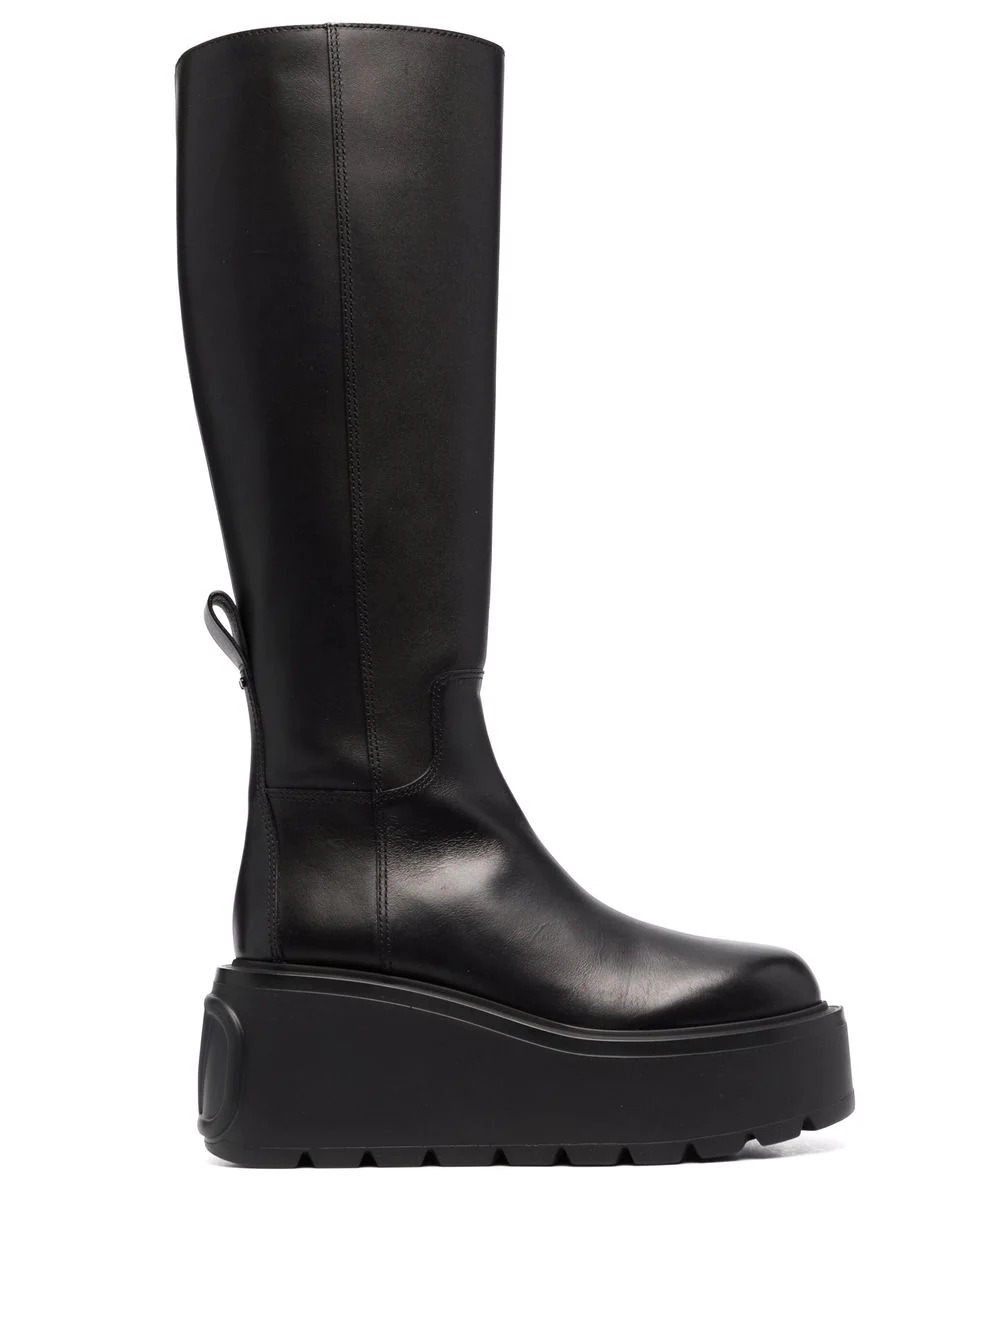 Knee-high leather platform boots